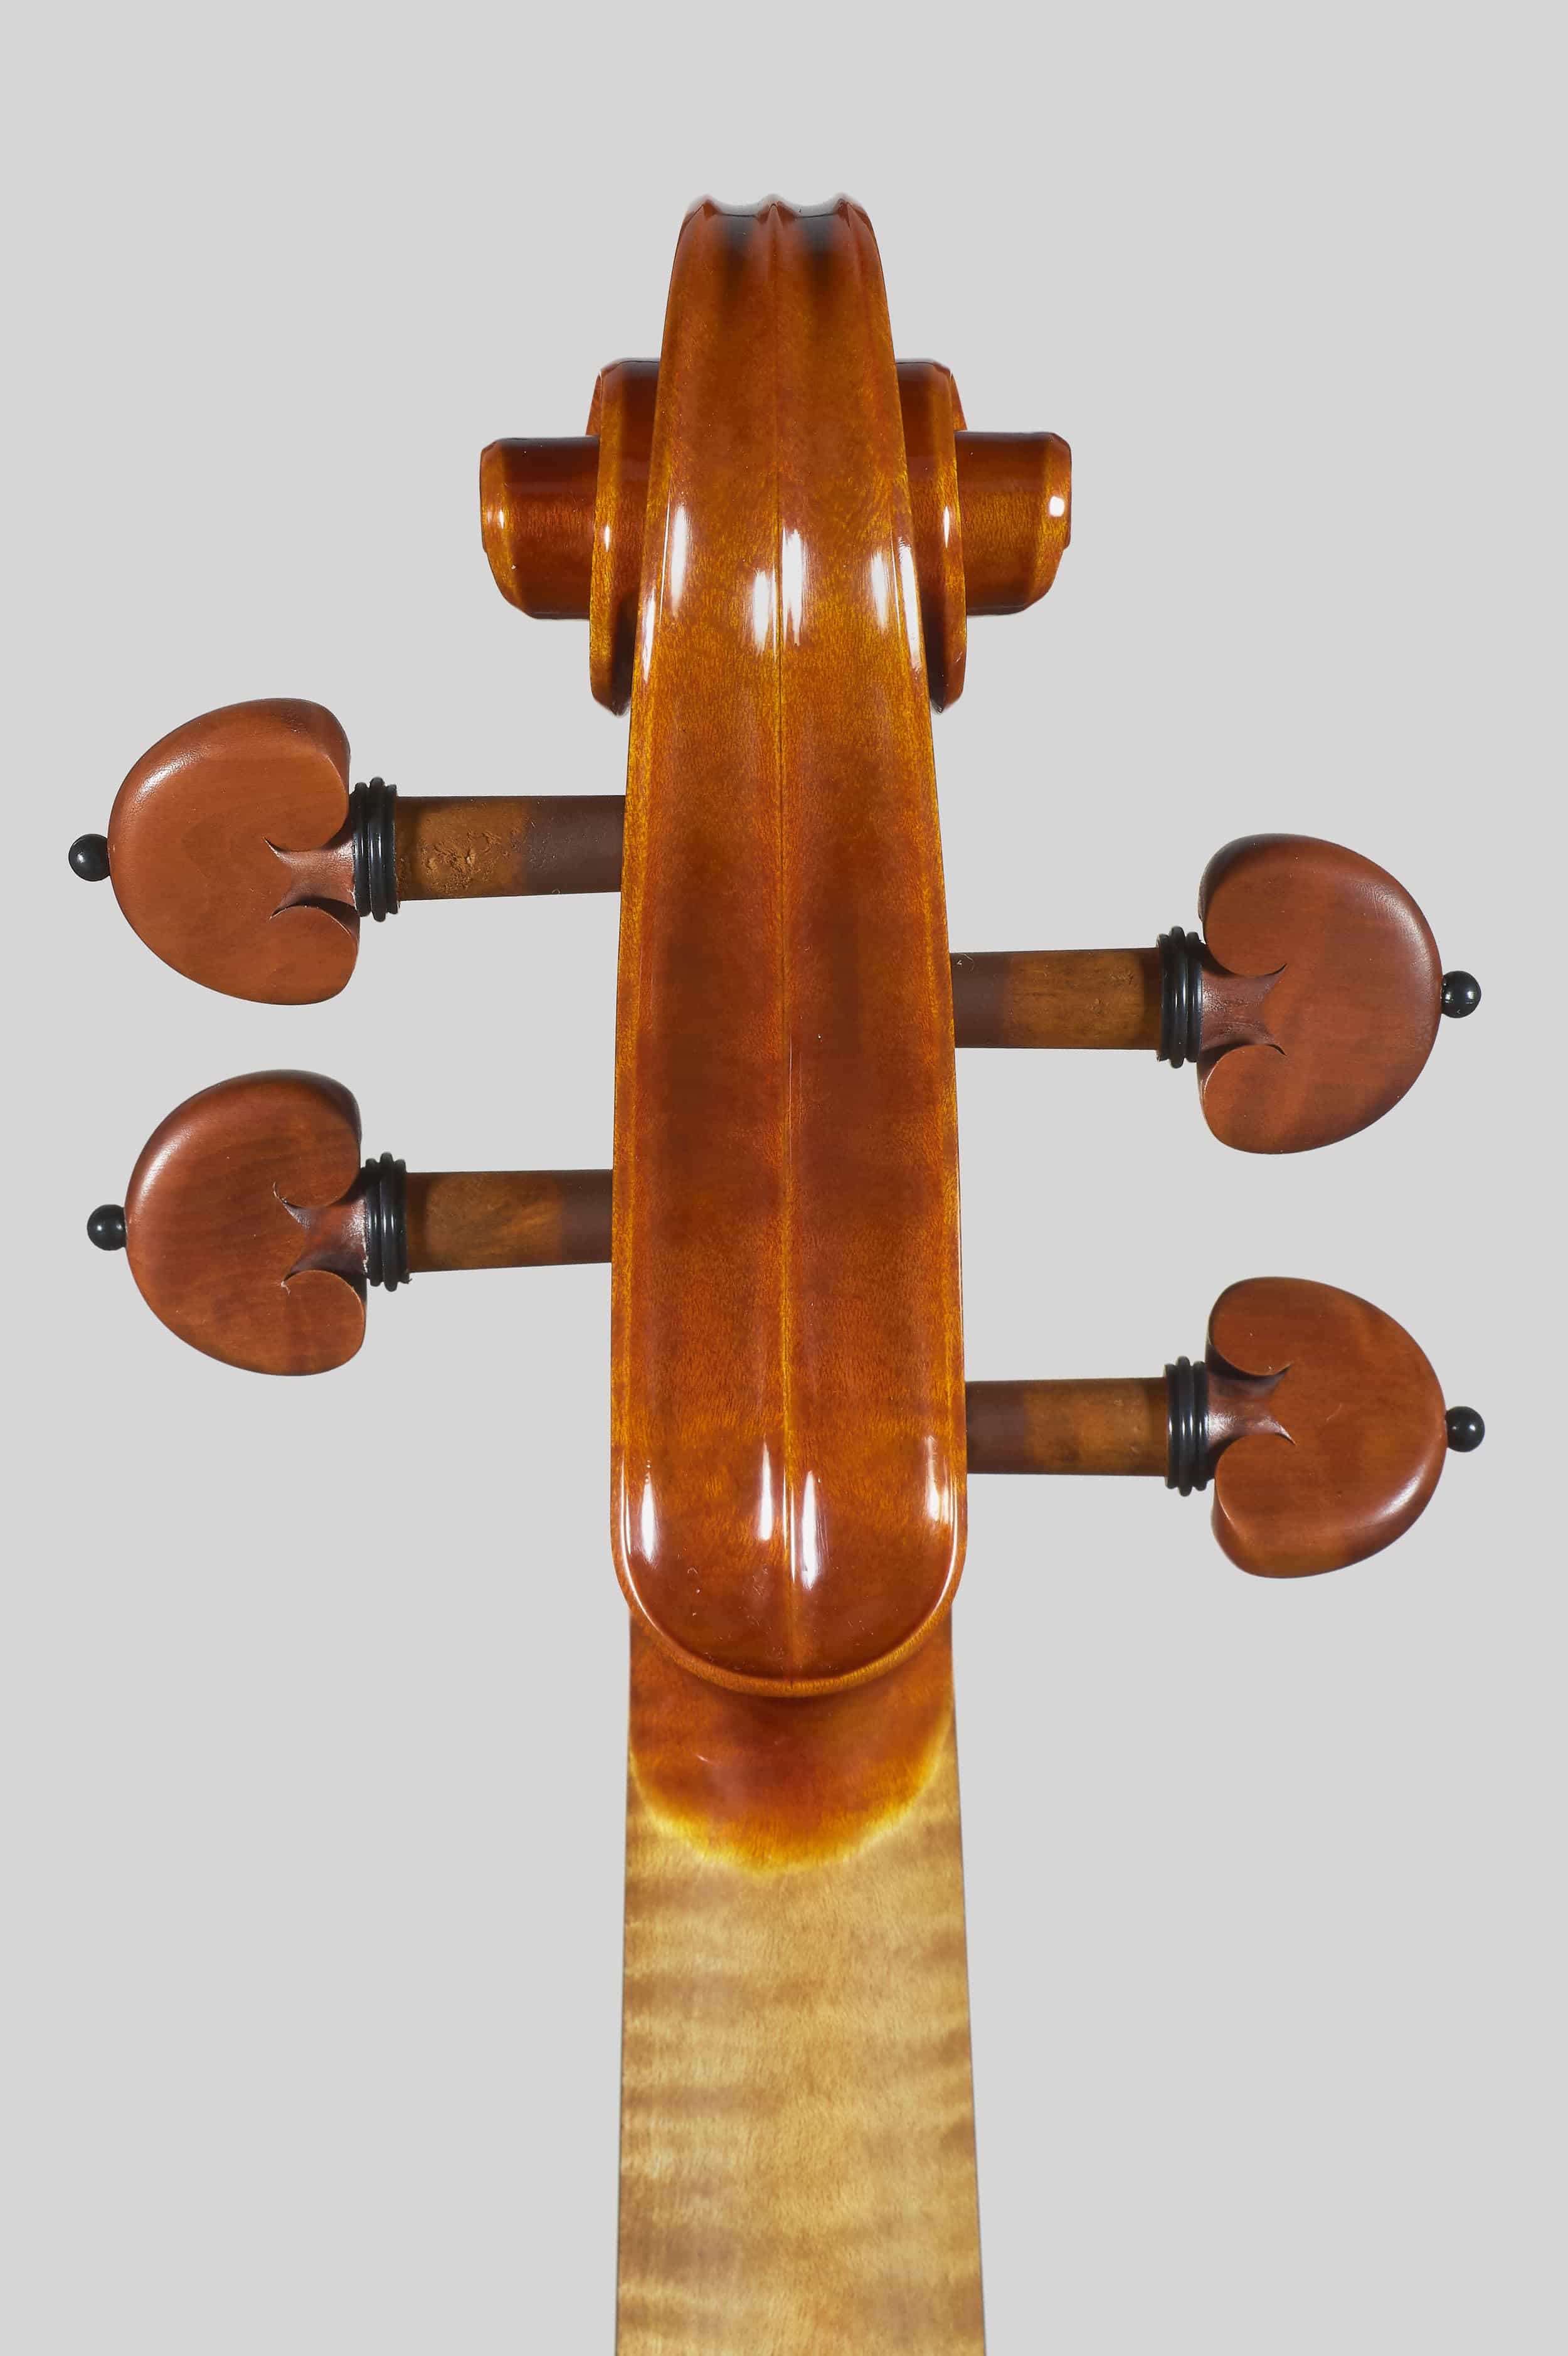 Anno 2017 - Violino modello stile A. Stradivari “Viotti” 1709 - Testa retro